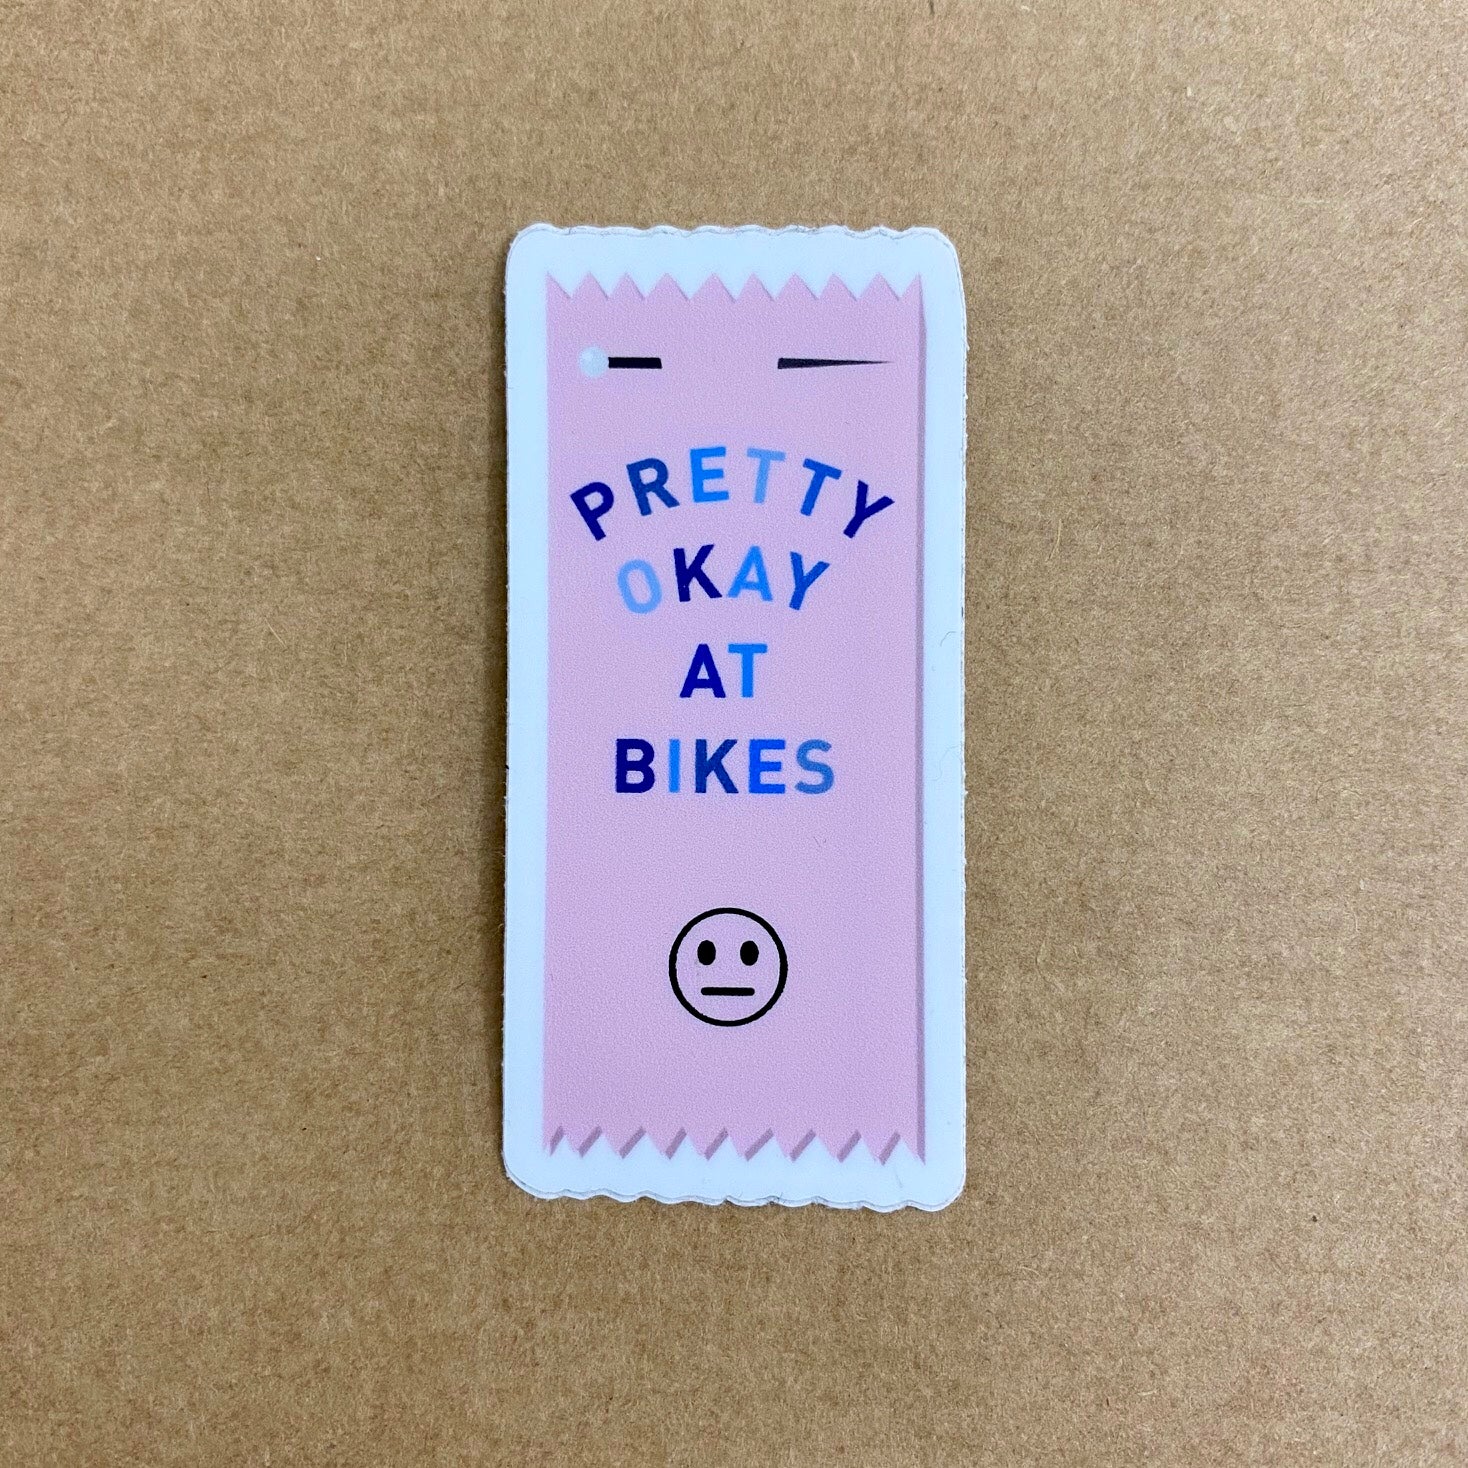 OSTROY Pretty Okay at Bikes Sticker